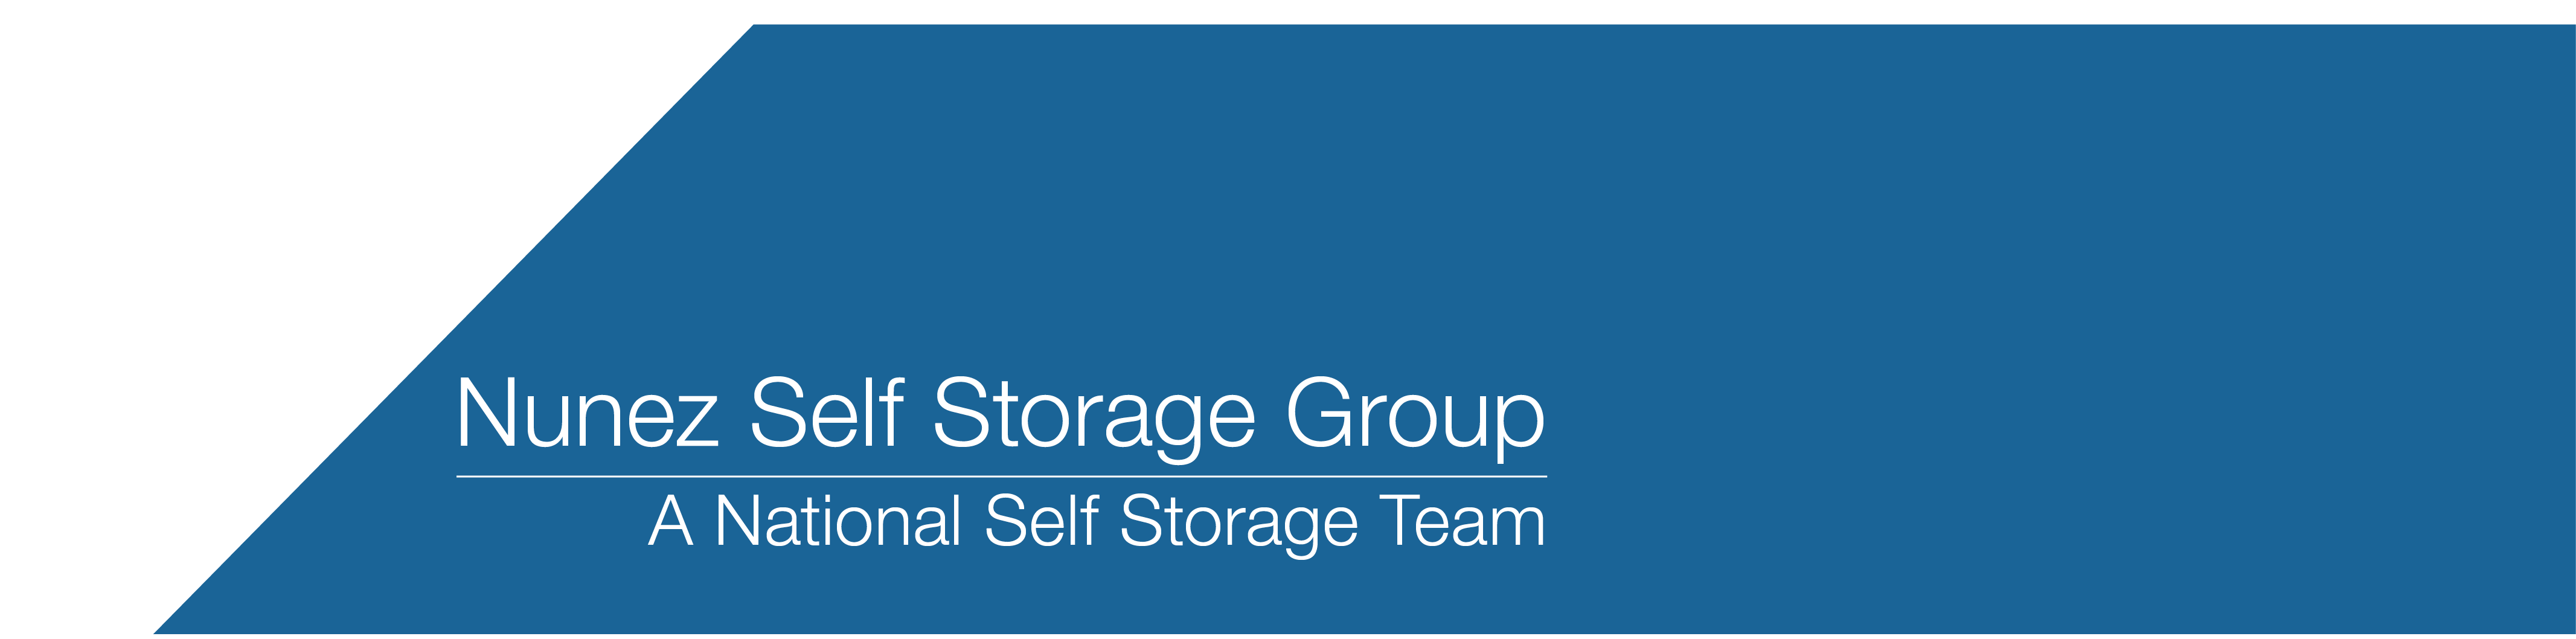 Nunez Self Storage Group